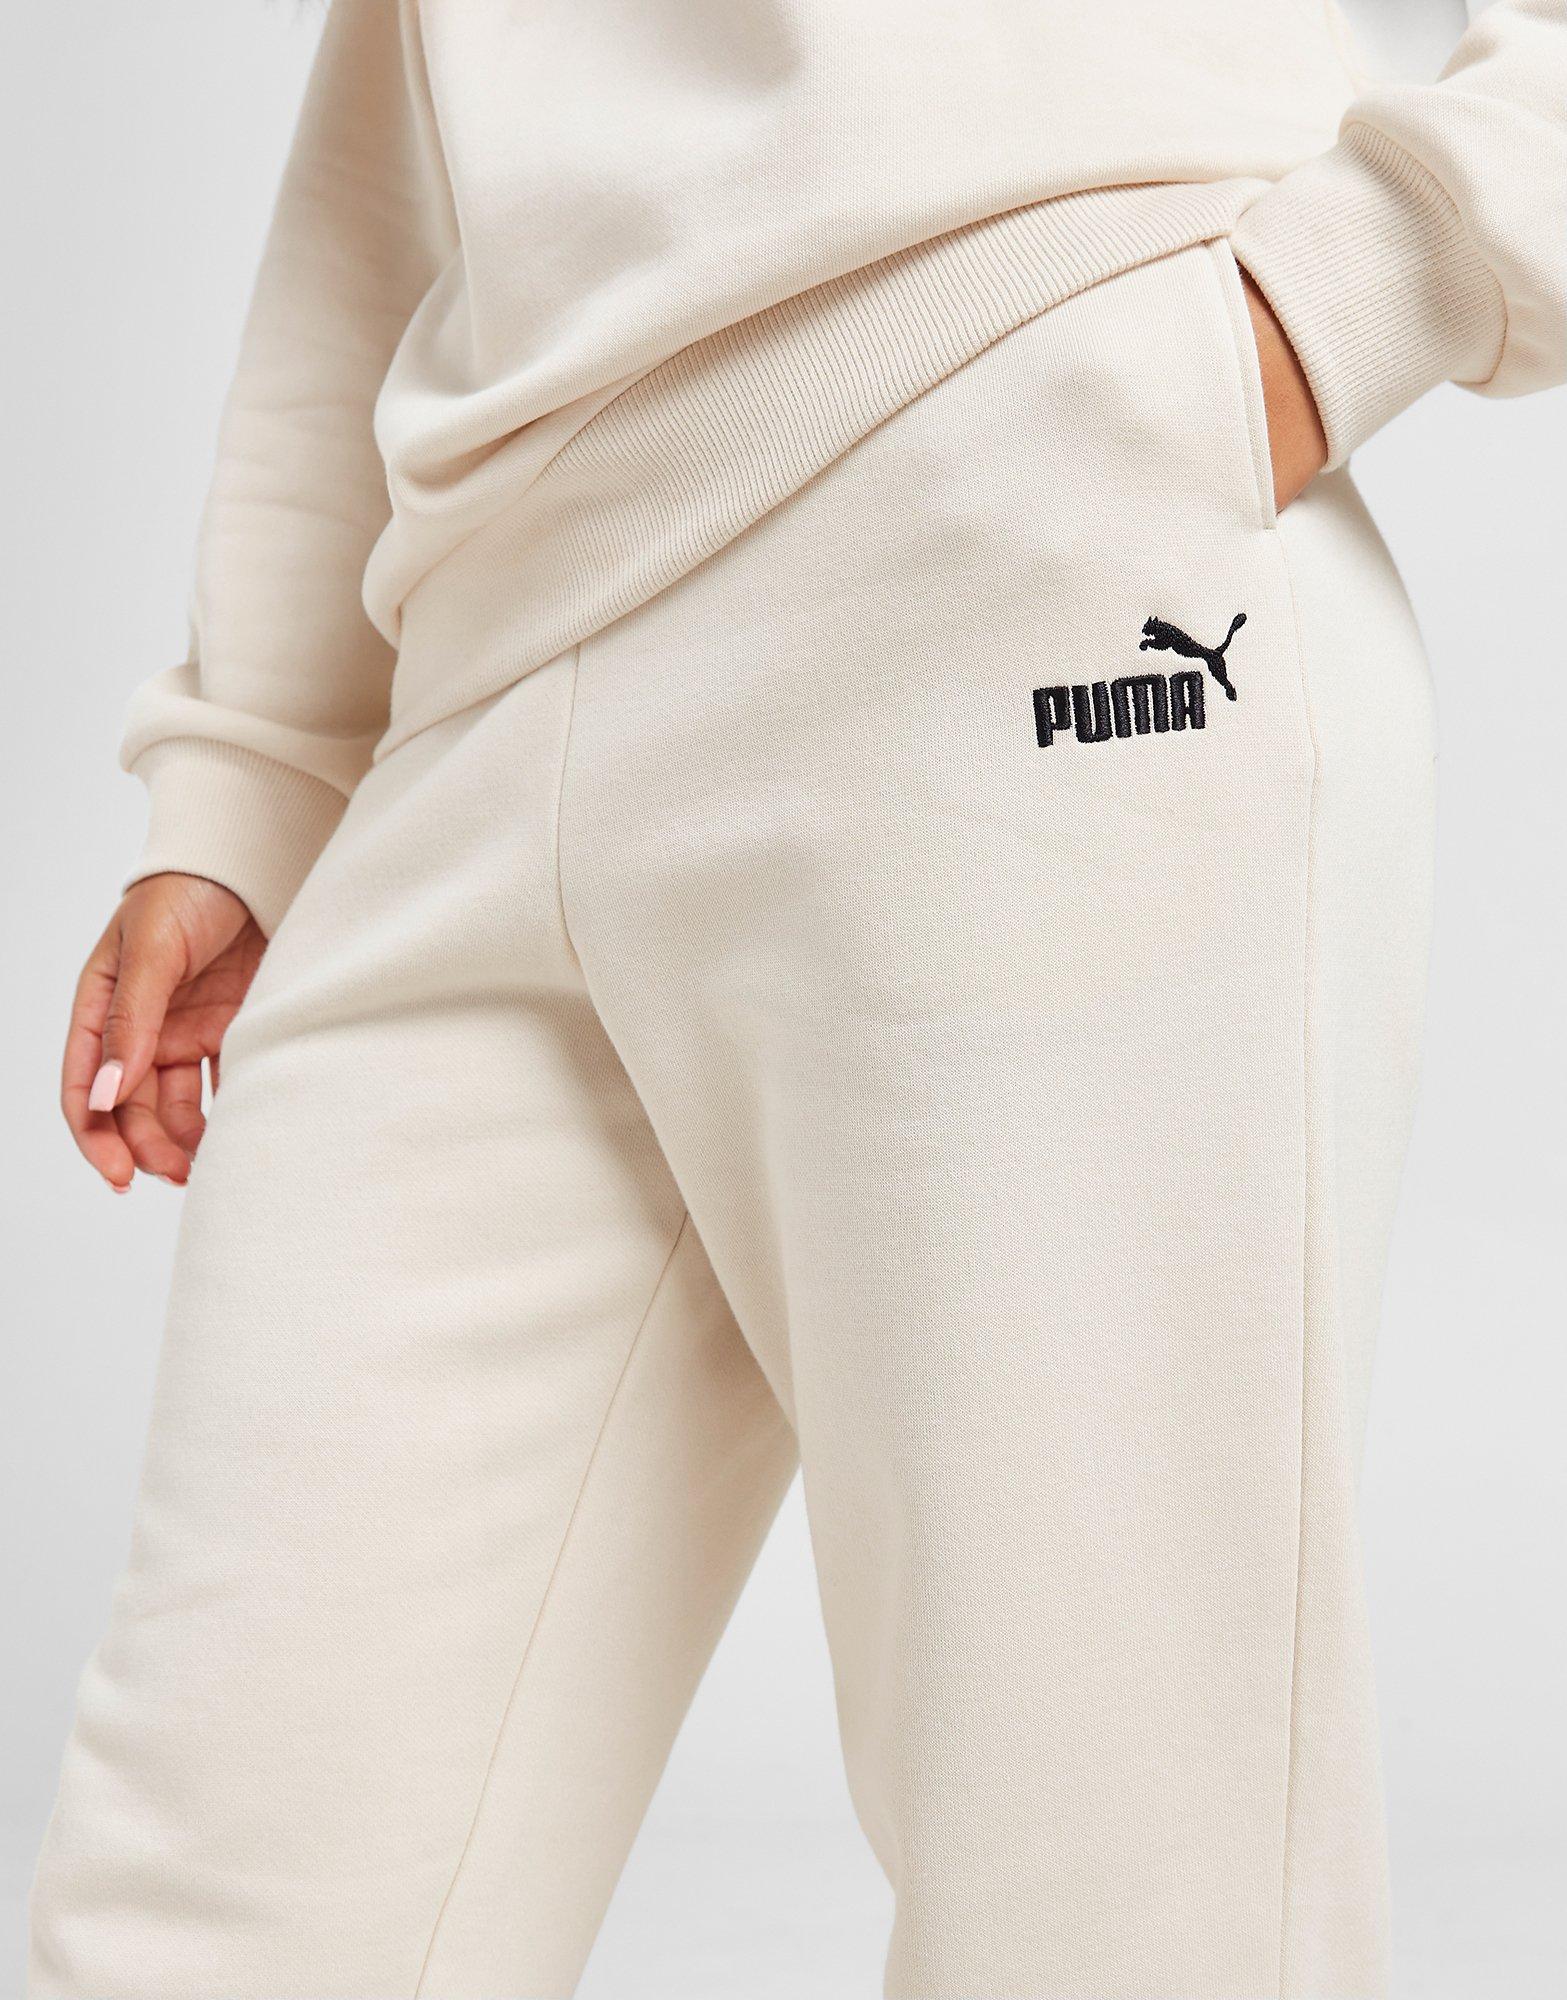 Puma Jogging Emblem Femme Blanc- JD Sports France